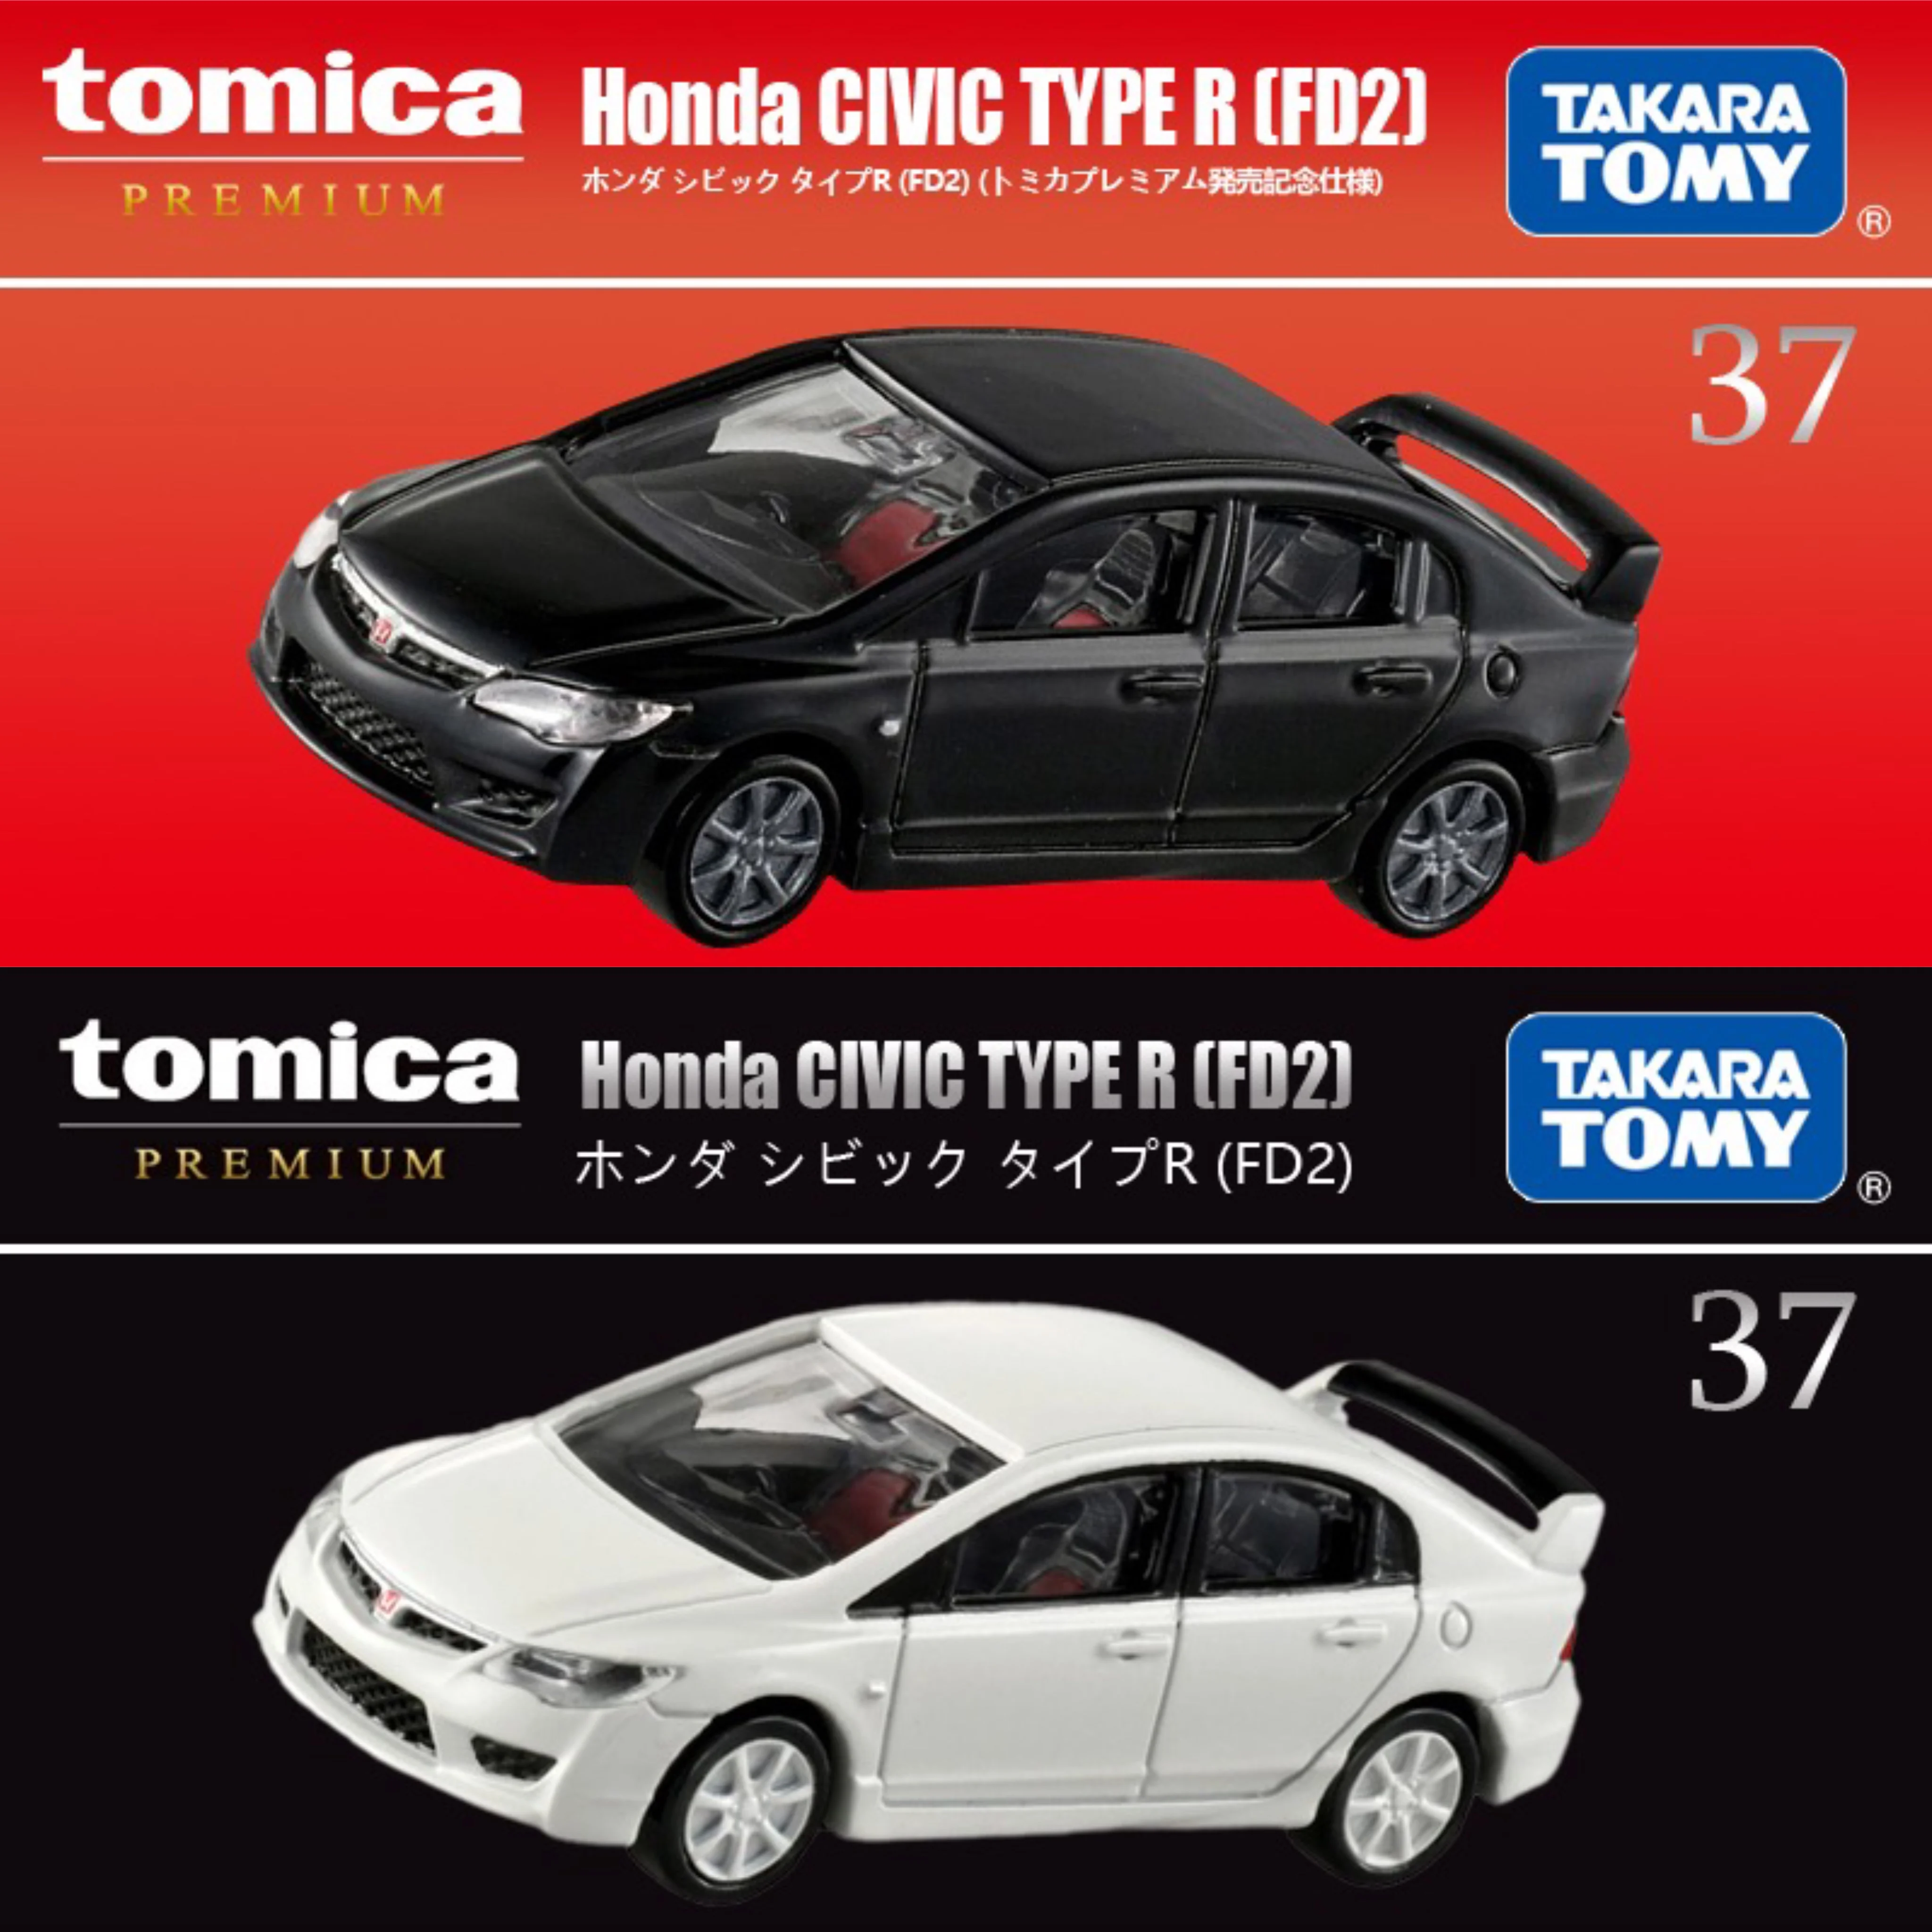 Original Tomica Premium Car Honda Civic Type R Carro 1/64 Diecast Metal Model Takara Tomy Kids Toys for Boys Children Gift